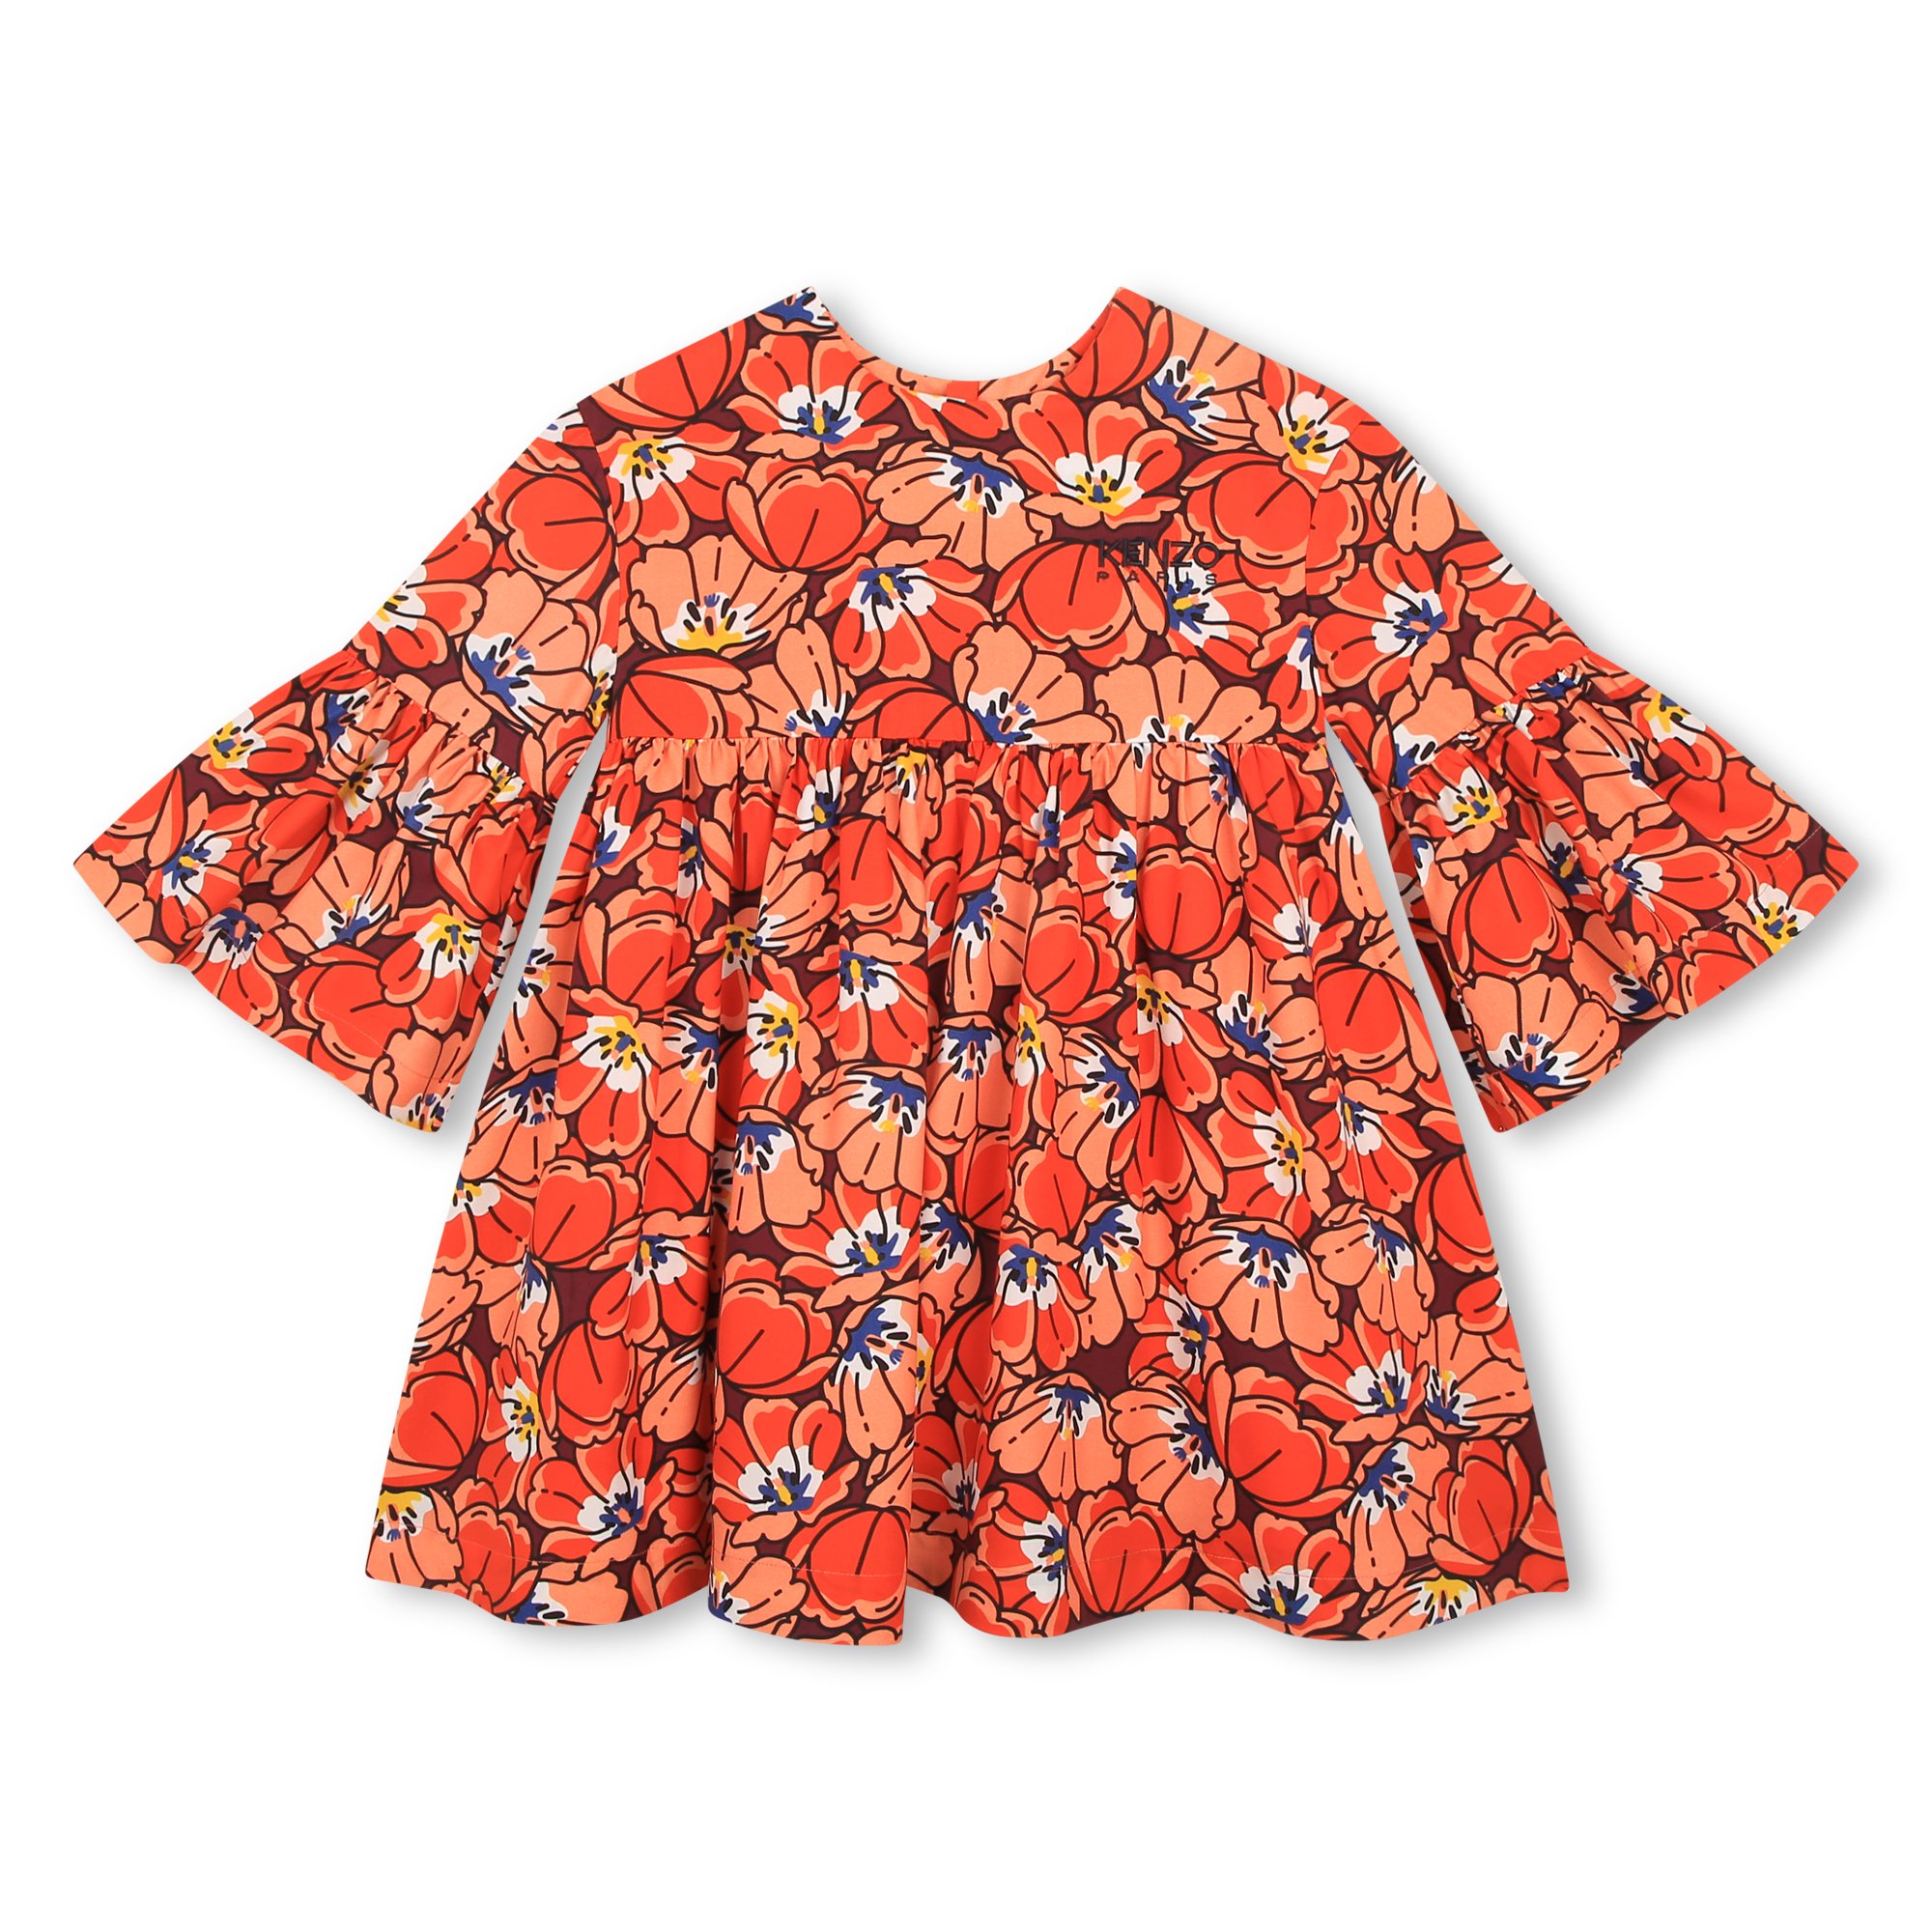 Printed zip-up dress KENZO KIDS for GIRL